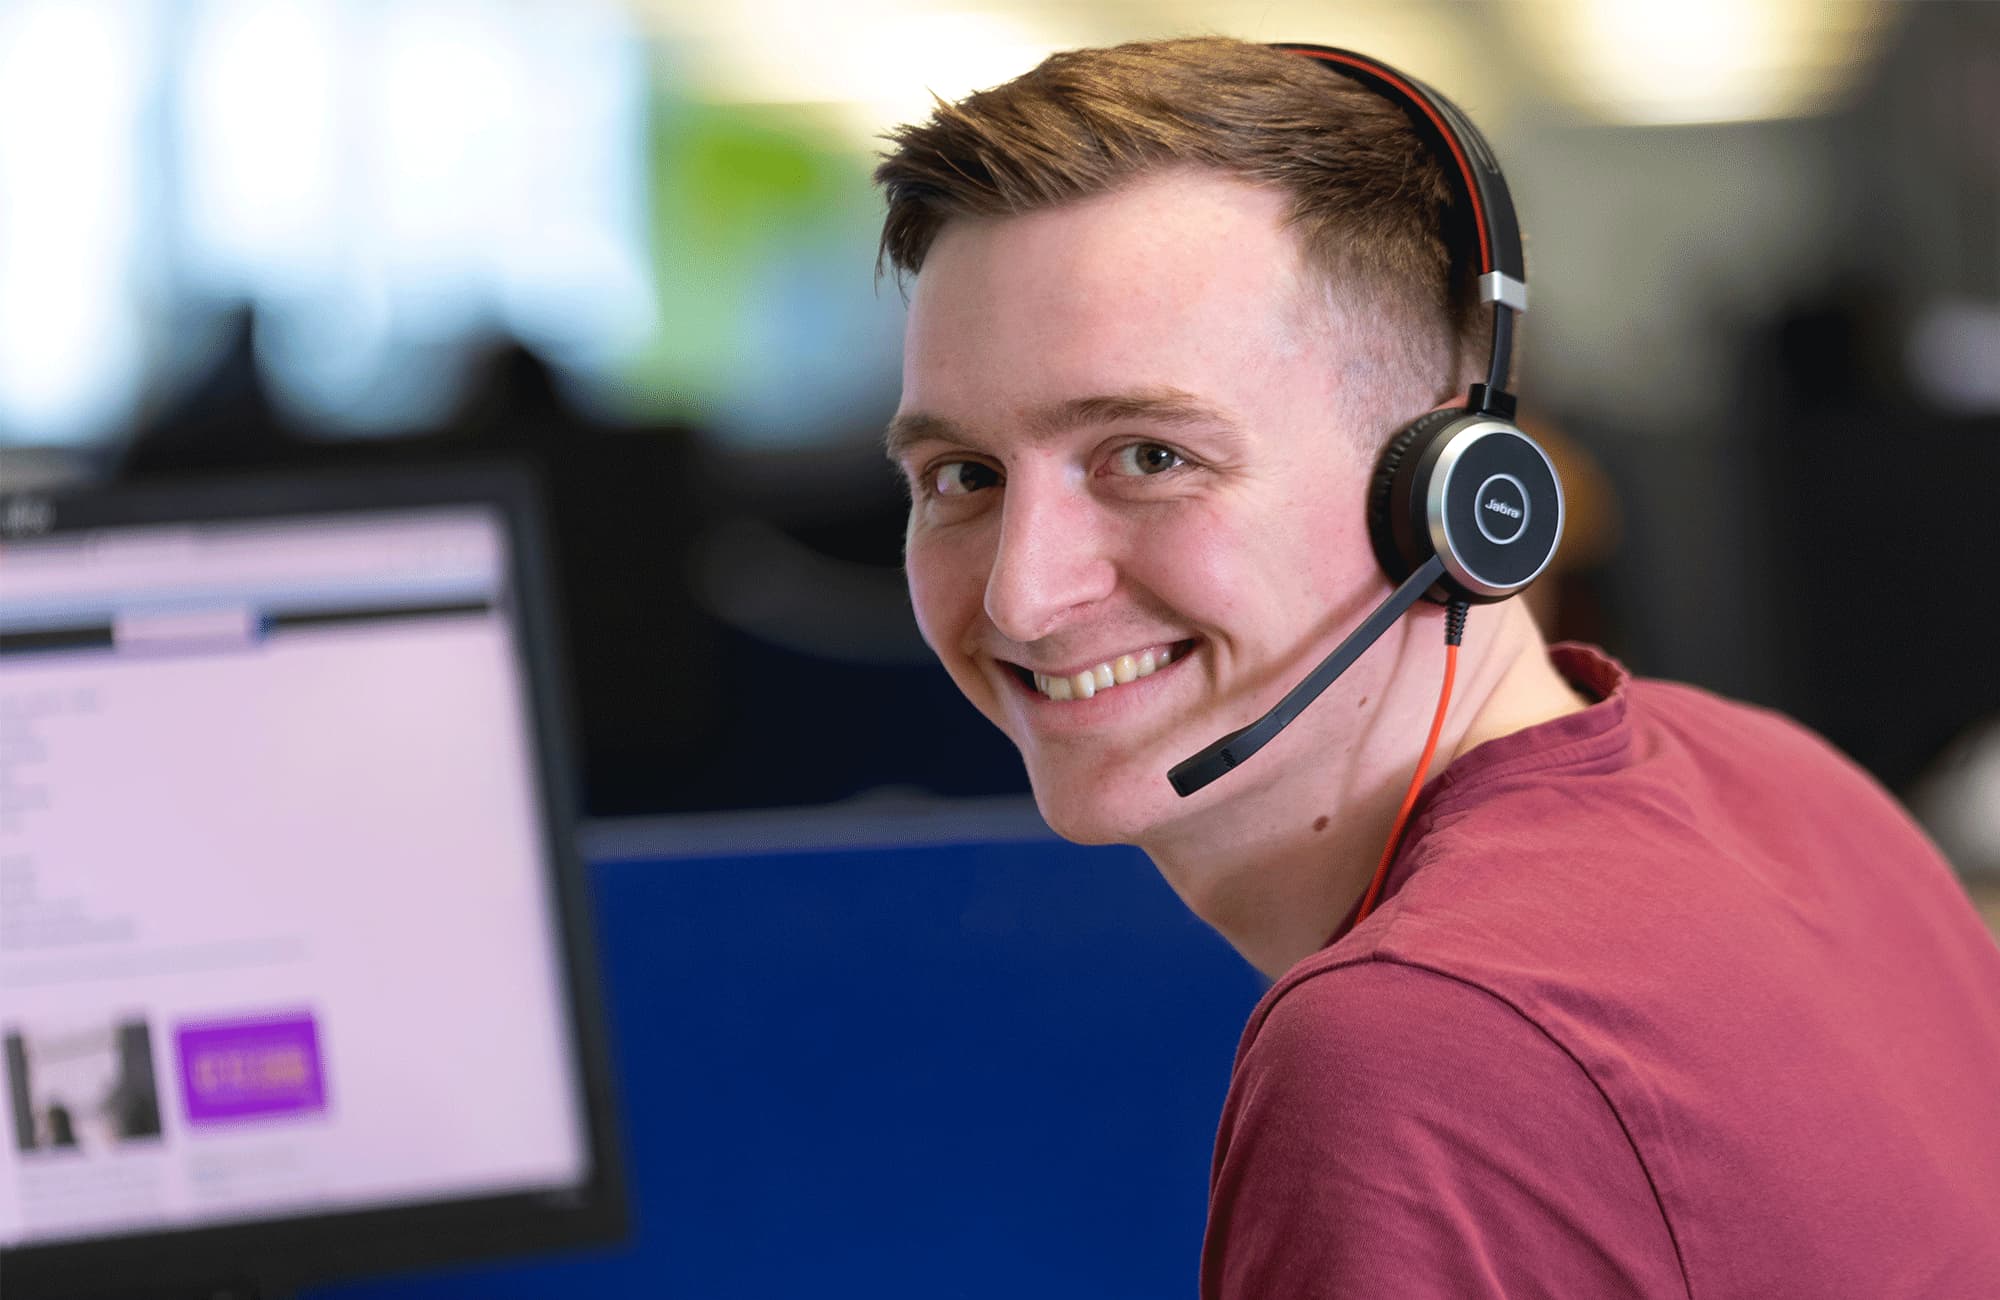 Customer Service advisor smiling wearing headset